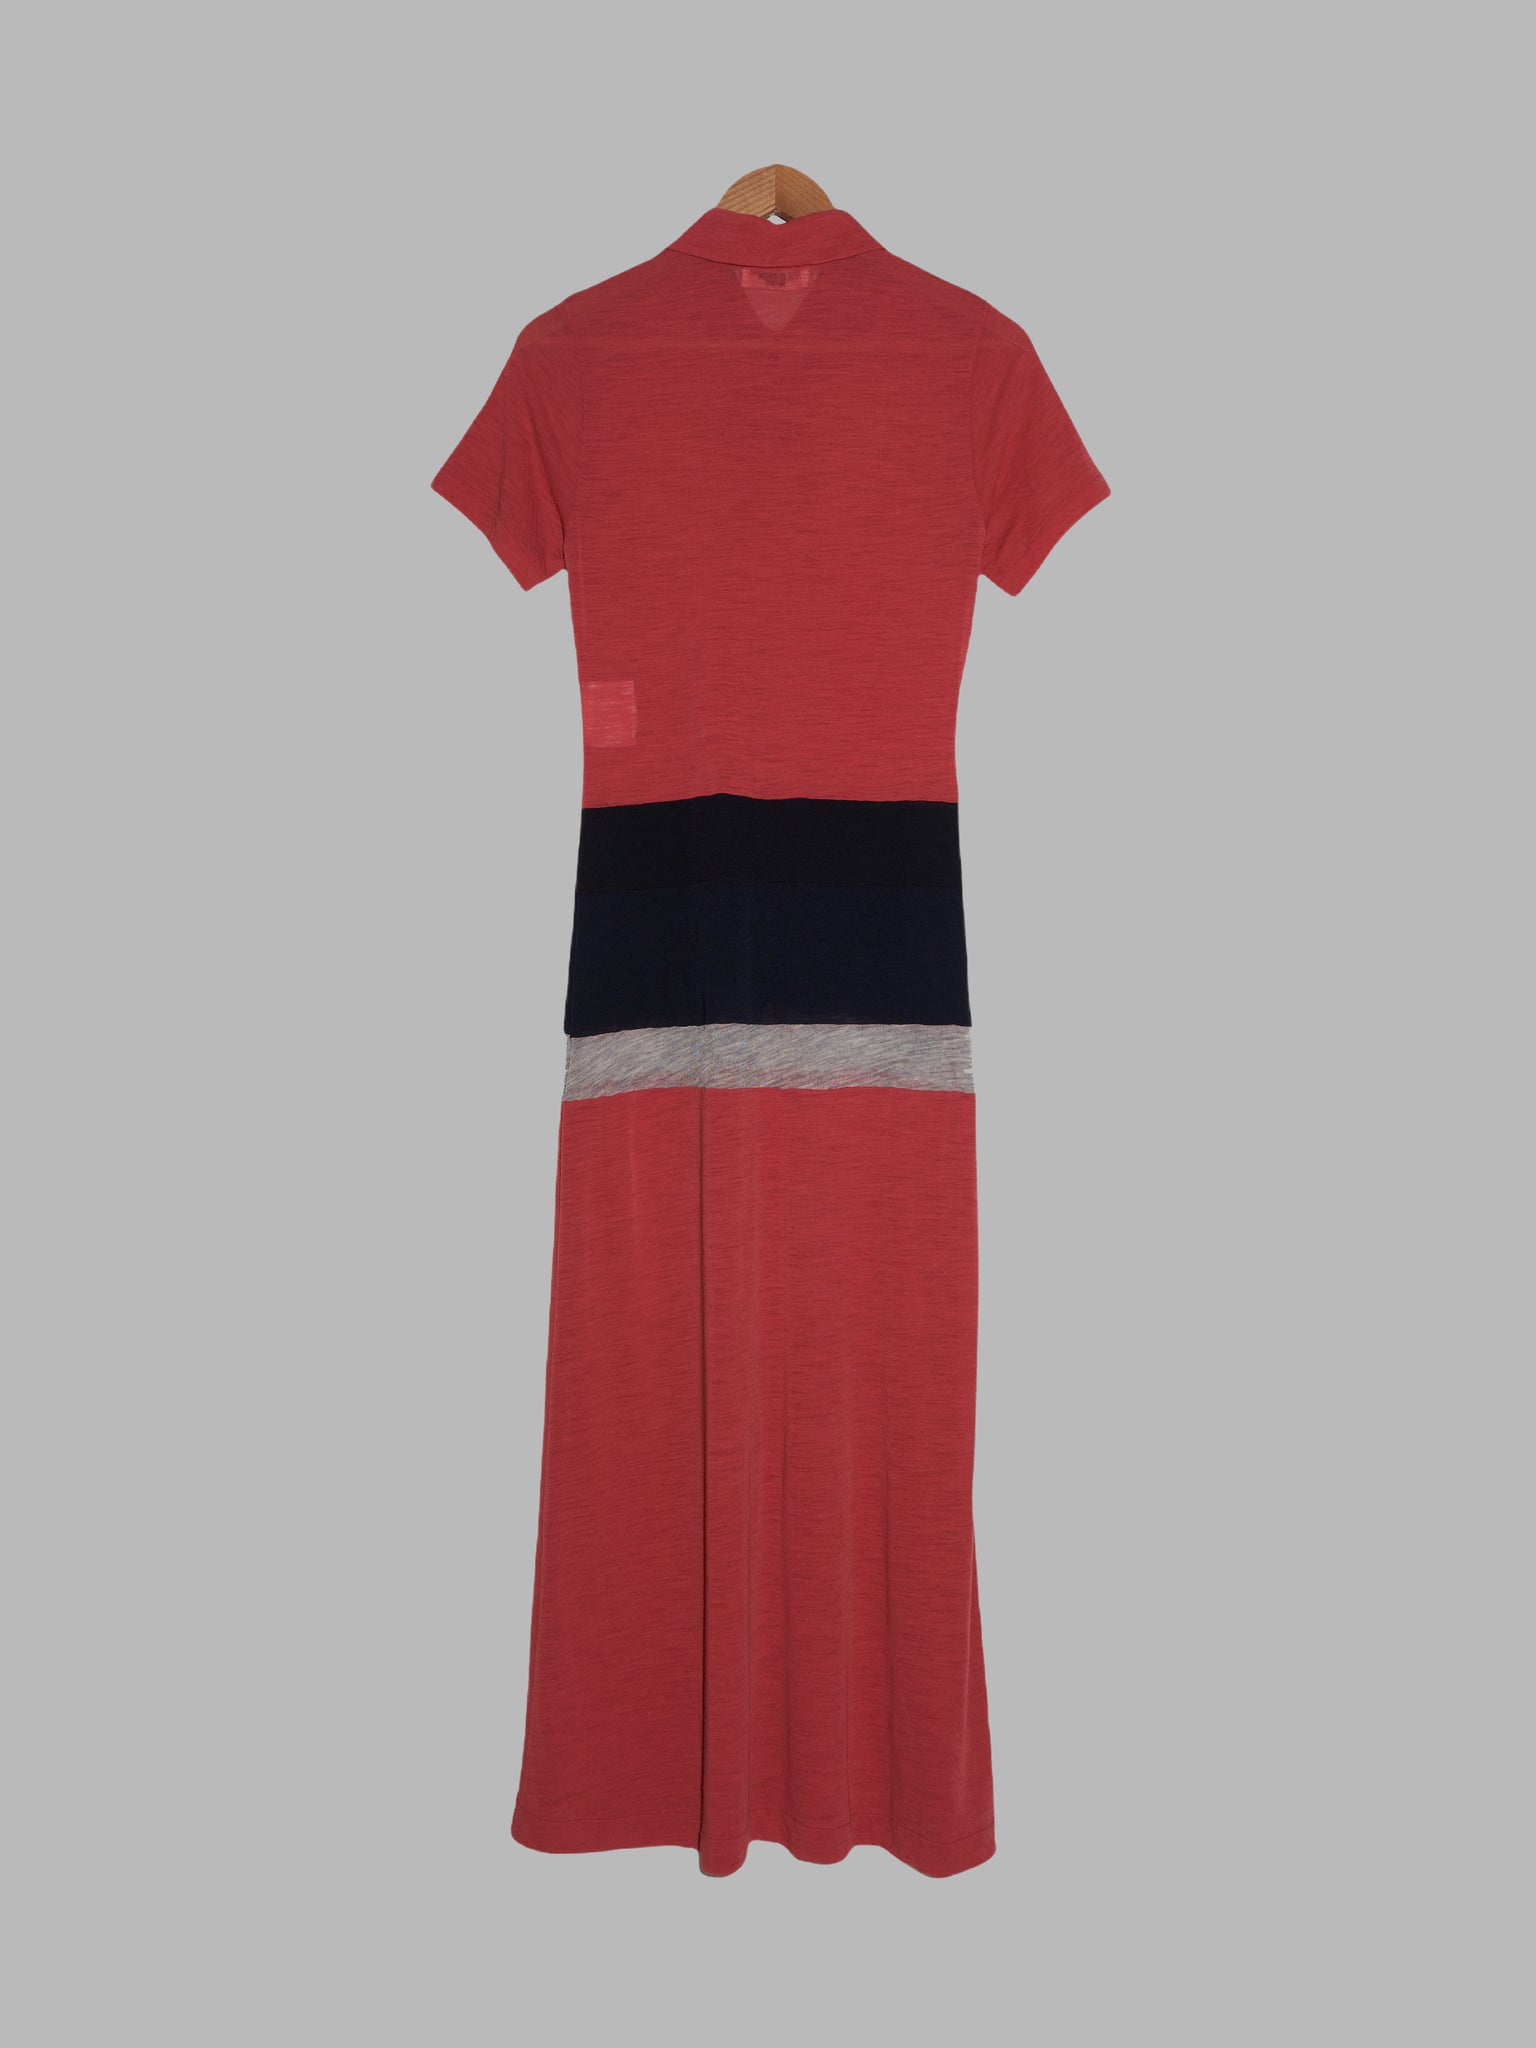 Comme des Garcons SS1996 burnt orange wool jersey polo shirt maxi dress